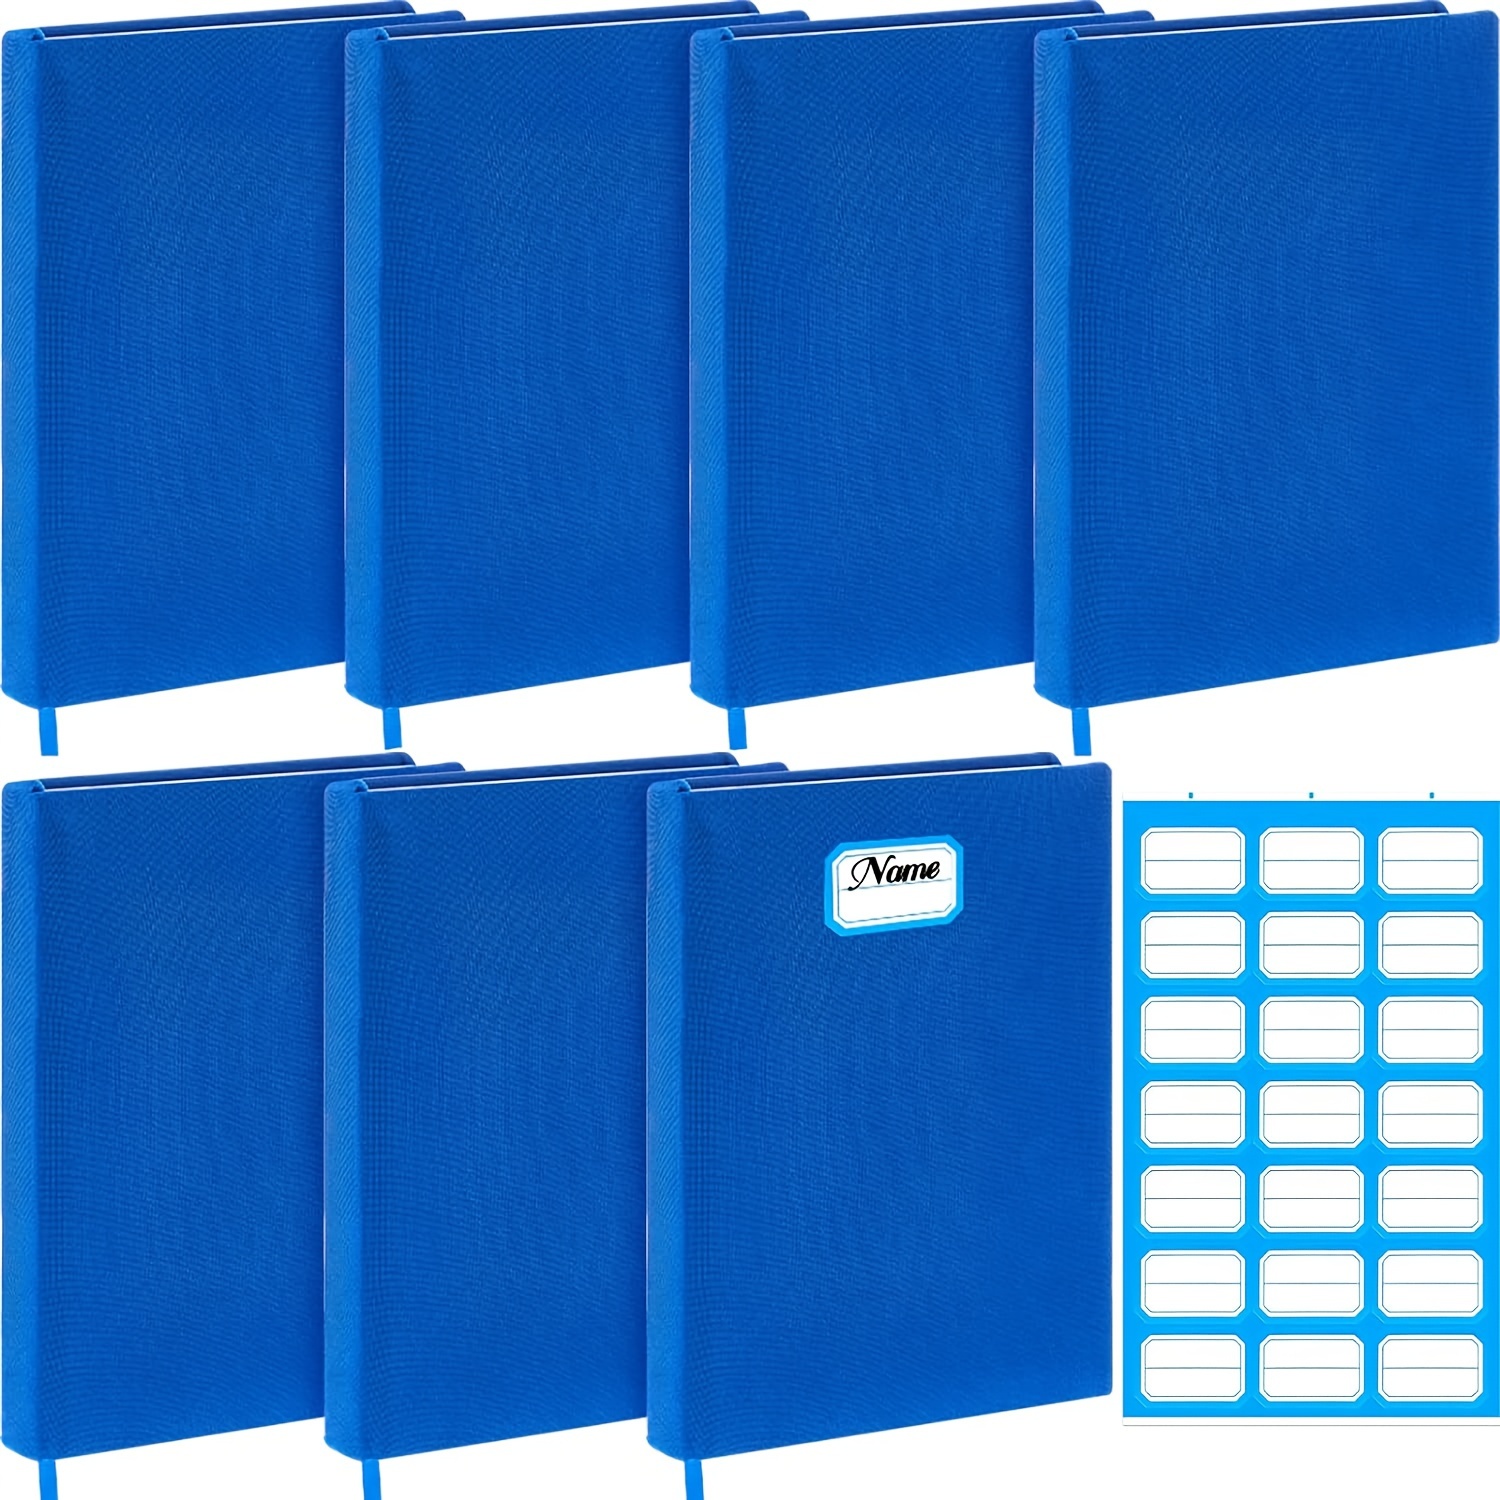 10PCS Clear Presentation Files Paper Cover Transparent Binding PVC